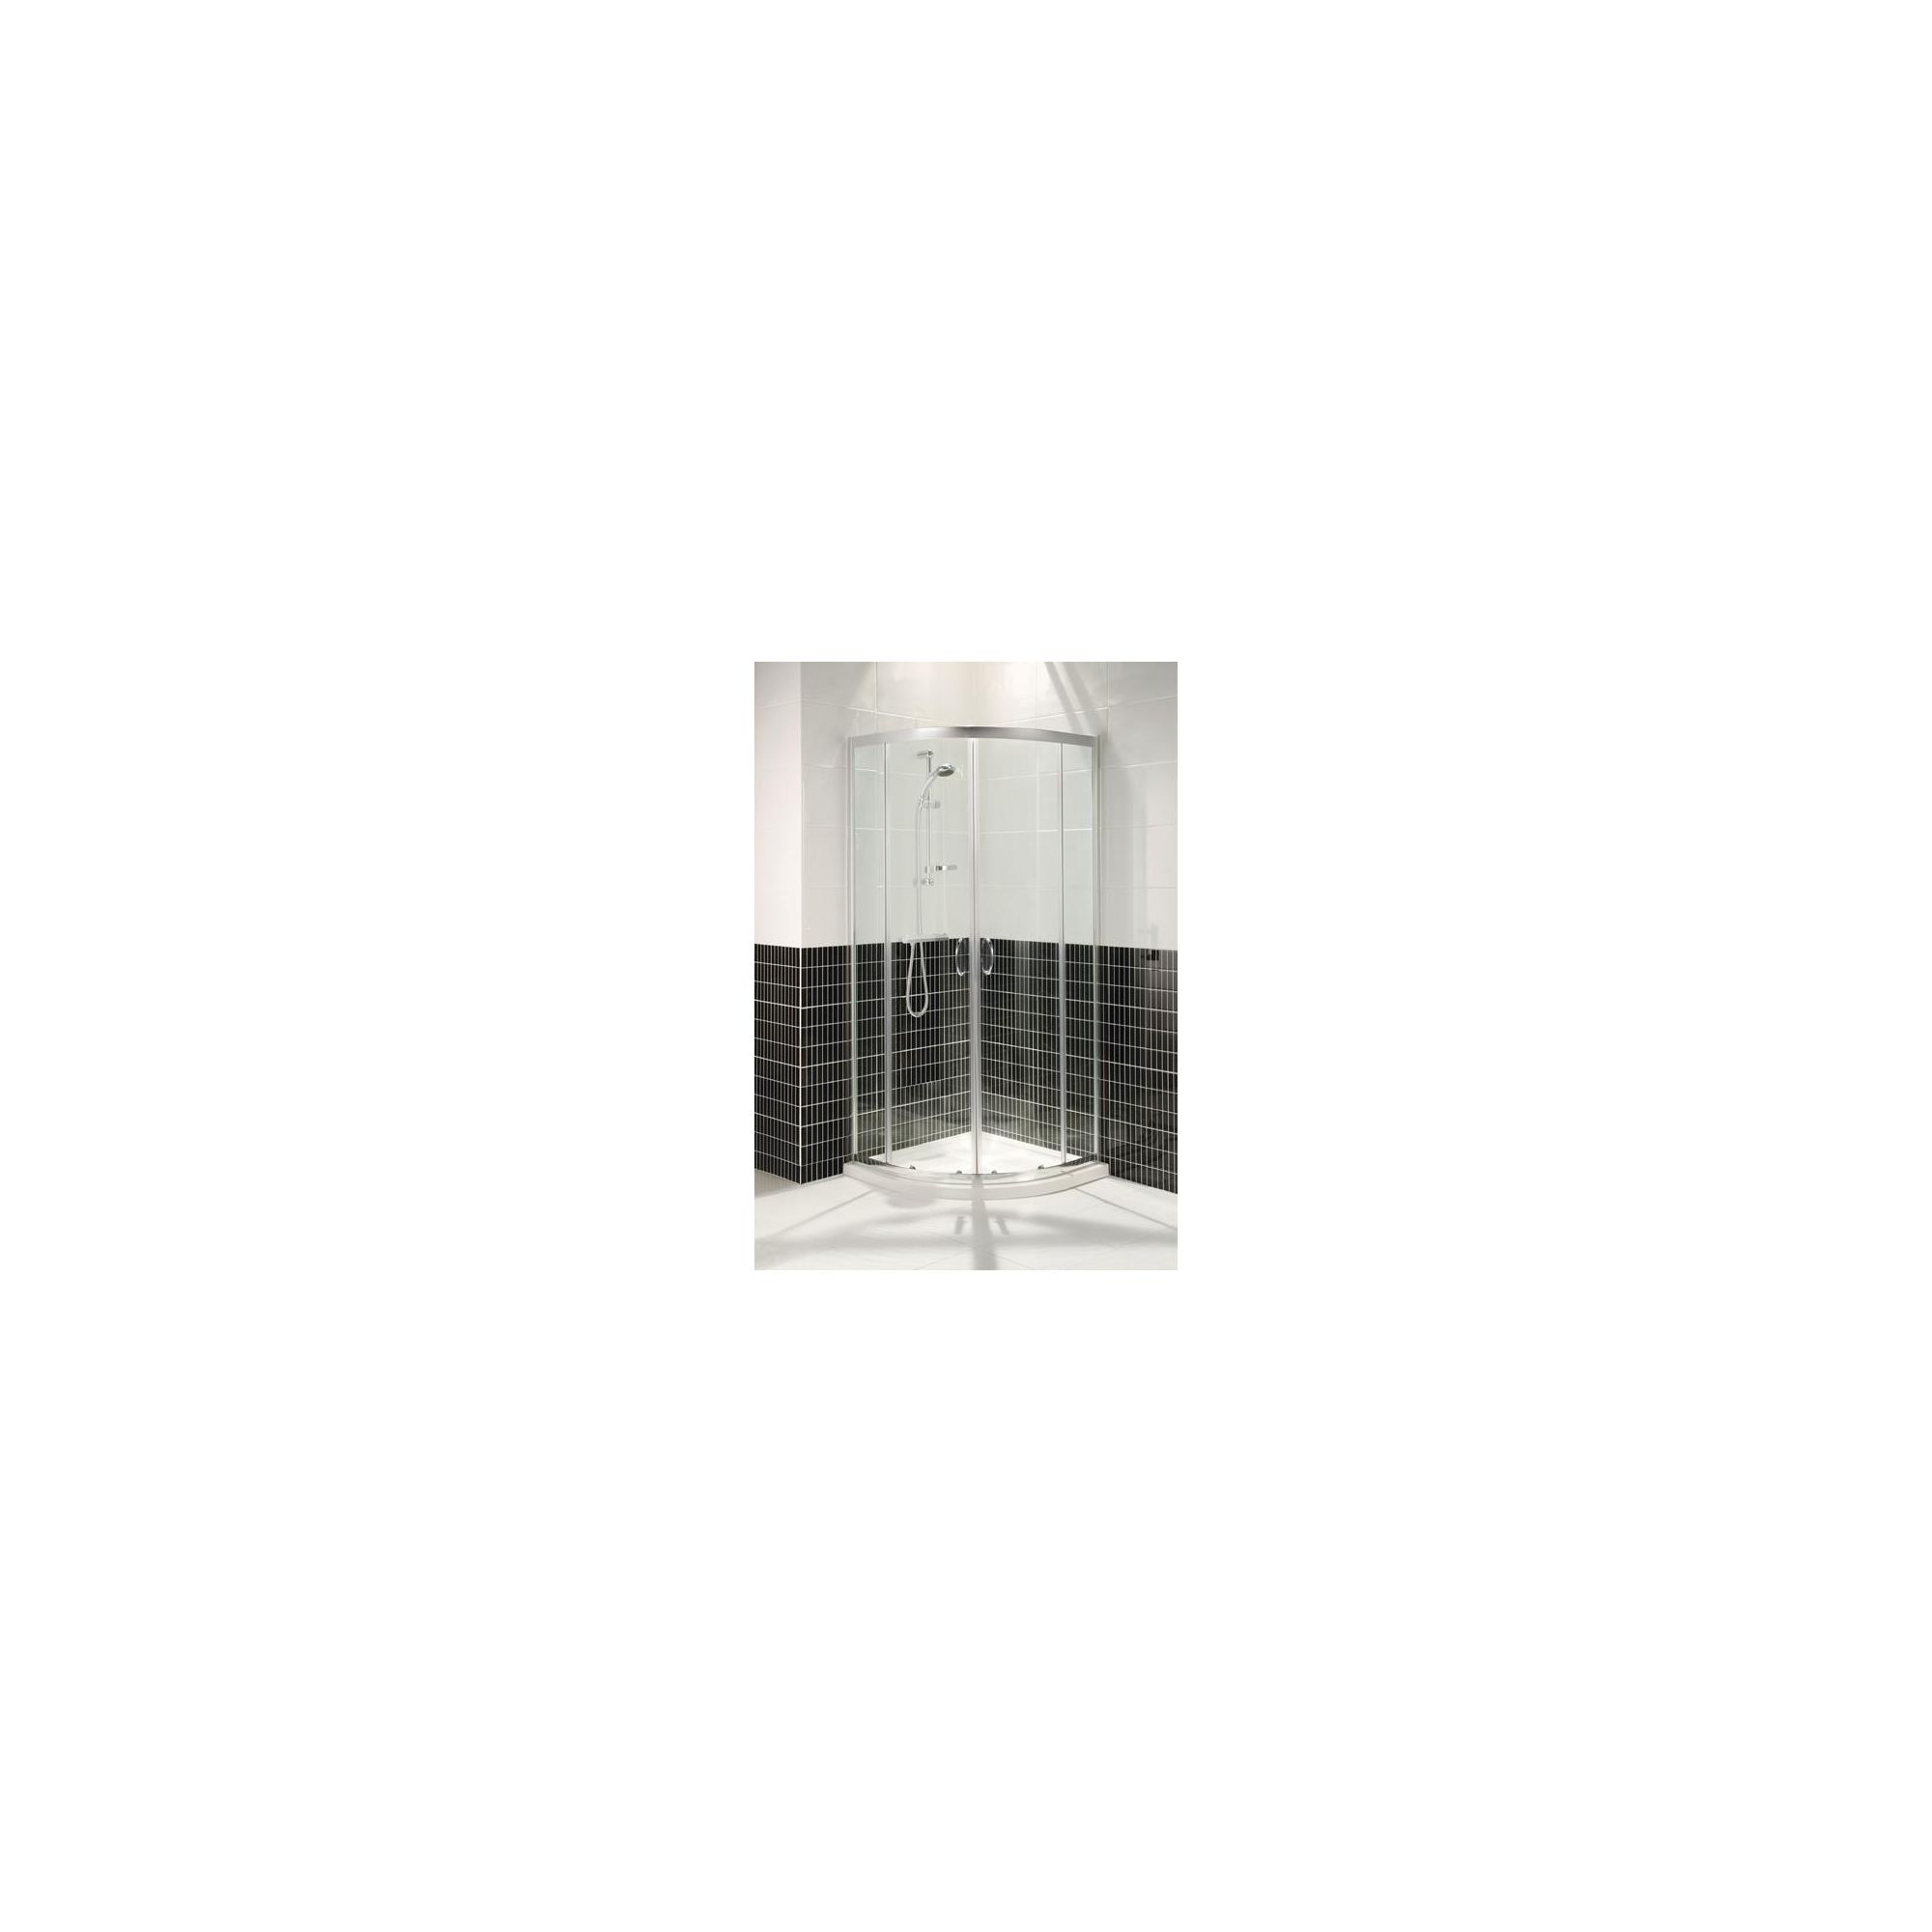 Balterley Semi-Frameless Quadrant Shower Enclosure, 800mm x 800mm, Low Profile Tray, 6mm Glass at Tesco Direct